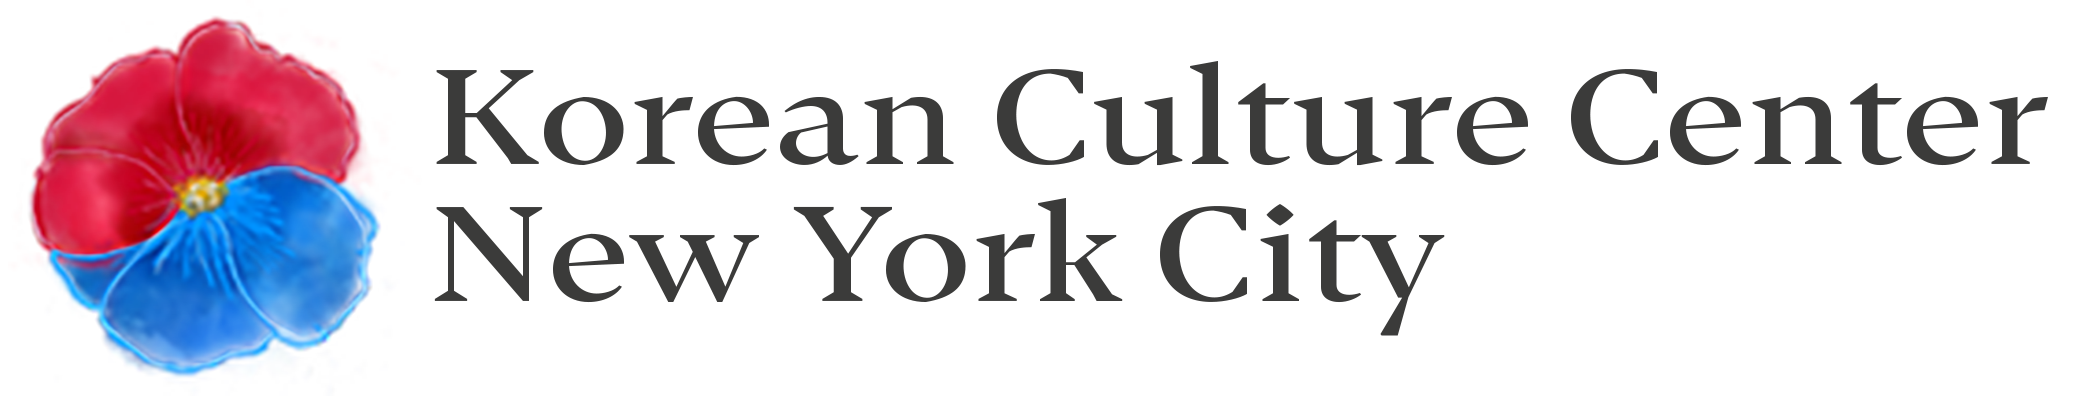 Korean culture center logo.png